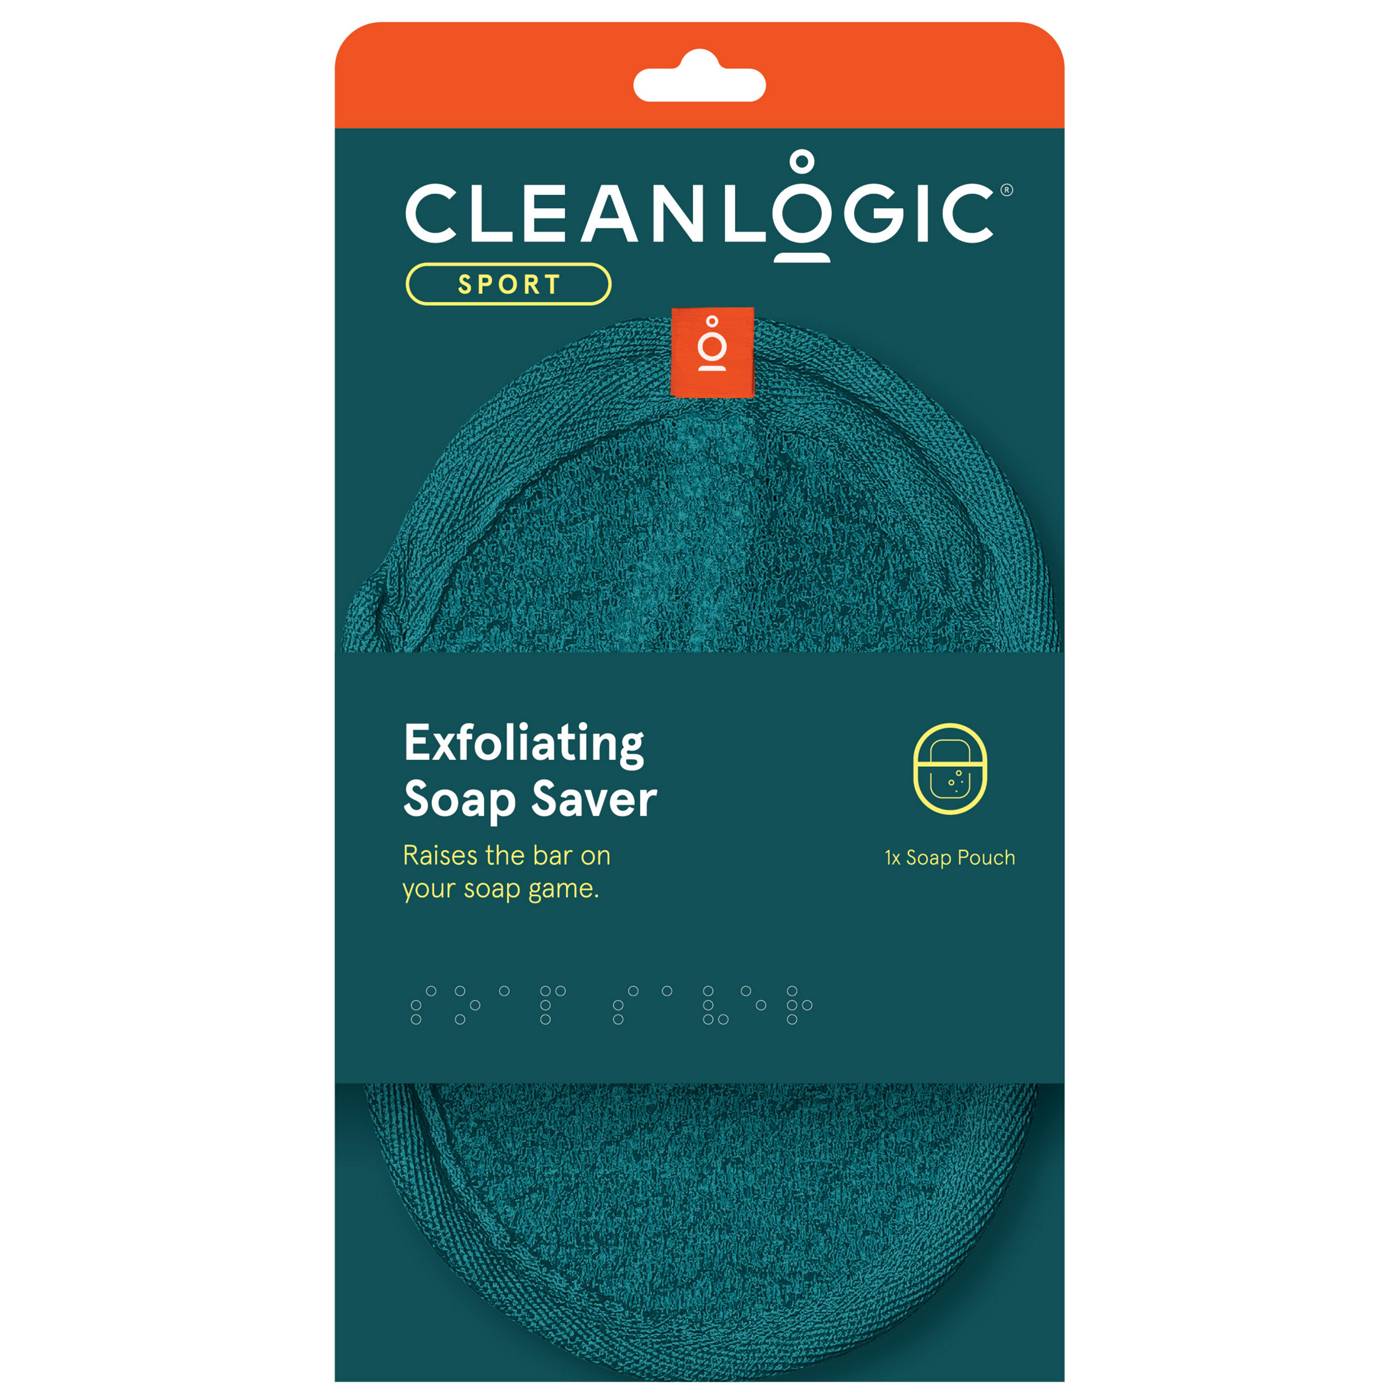 Cleanlogic Sport Exfoliating Soap Saver; image 1 of 2